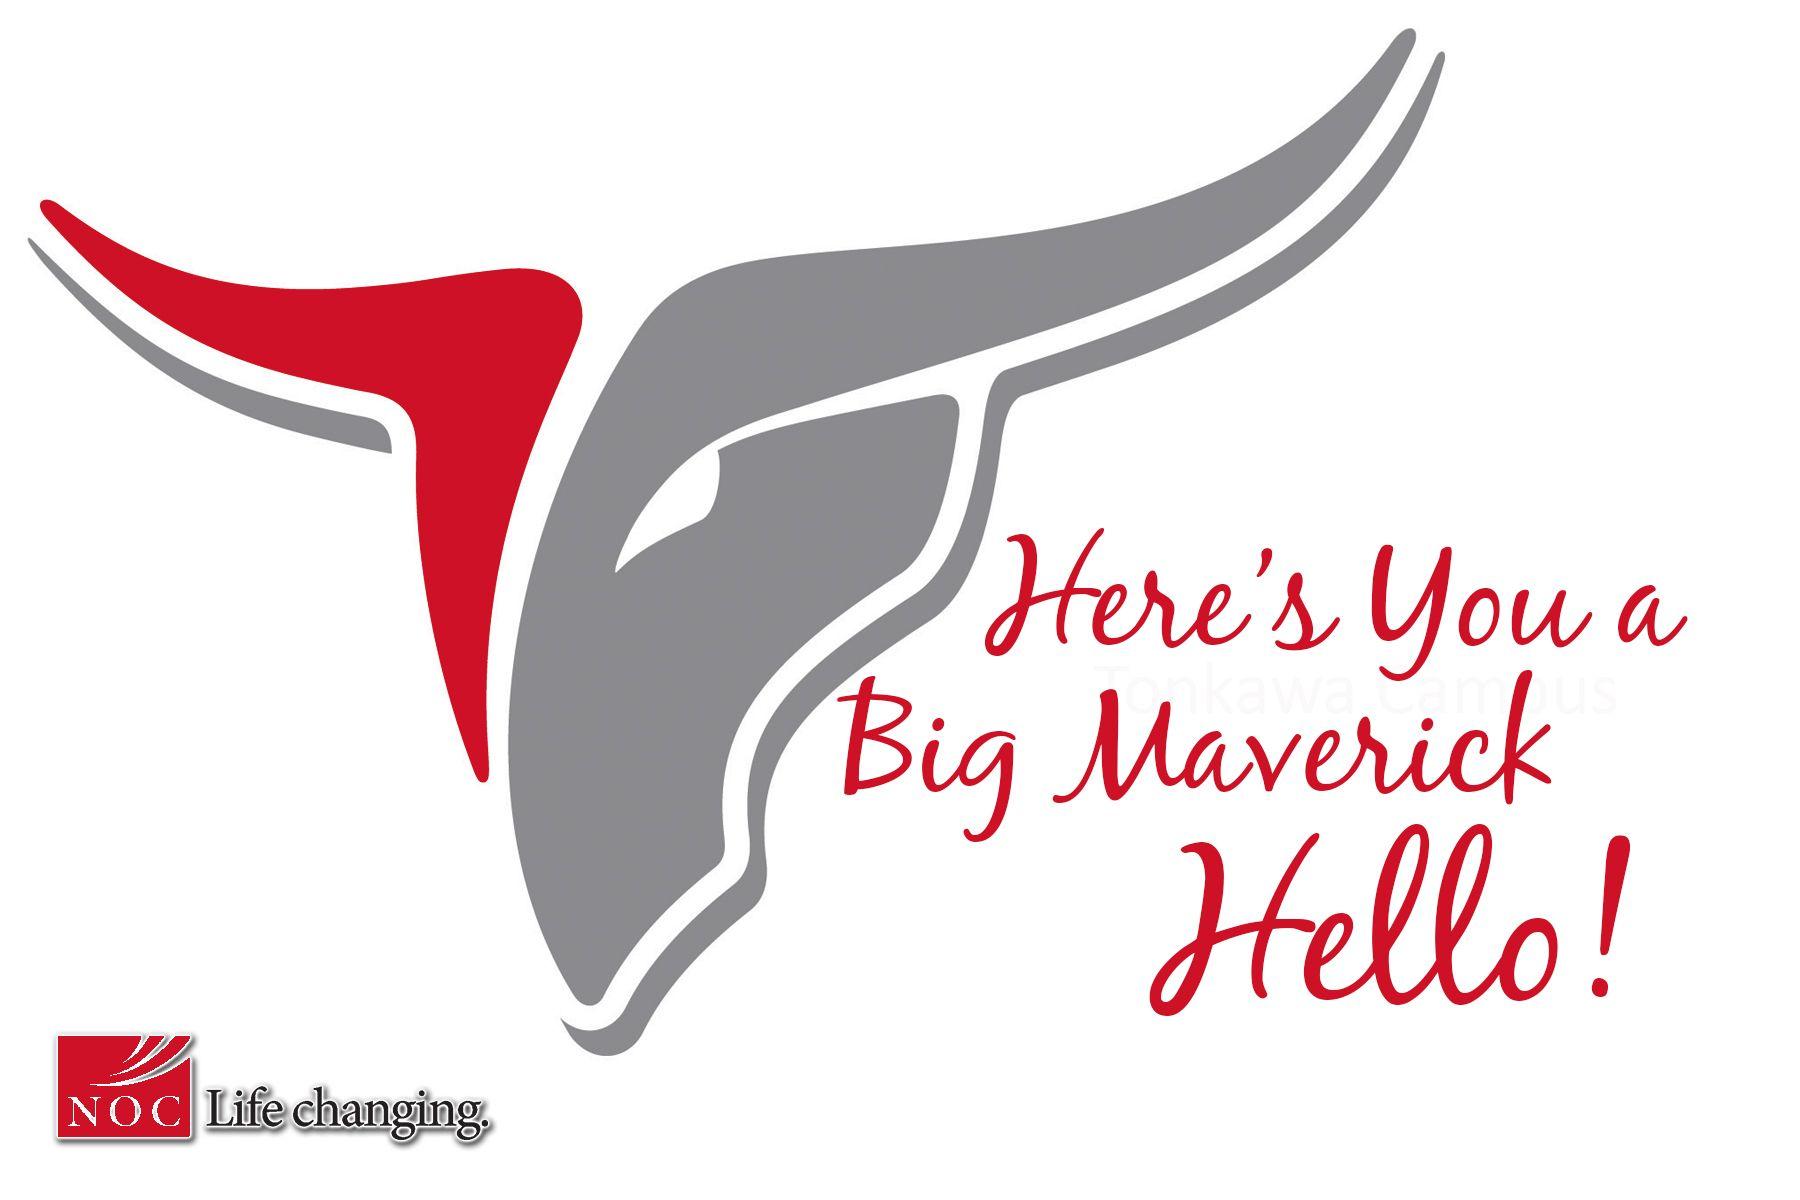 Be a Maverick Logo - Here's You a Big Maverick Hello!. Northern Oklahoma College